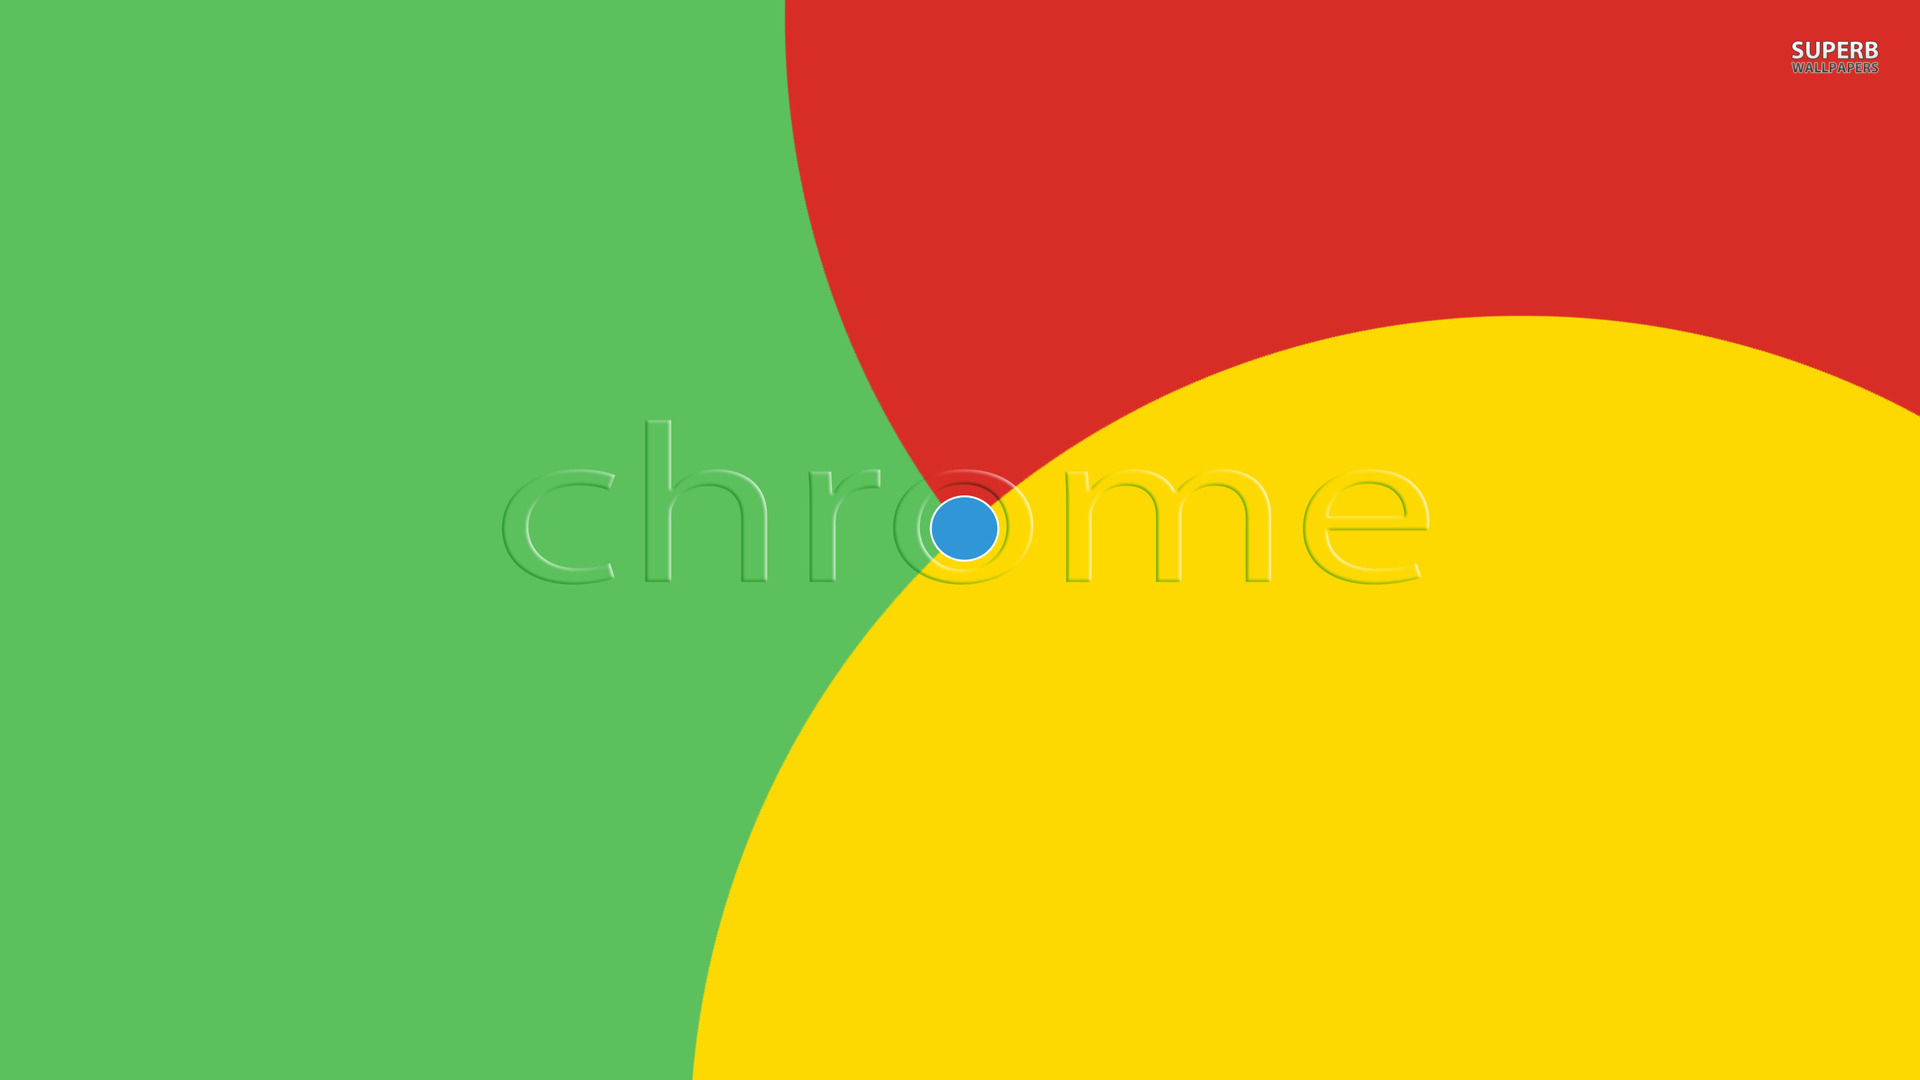 Google Chrome Wallpaper Puter